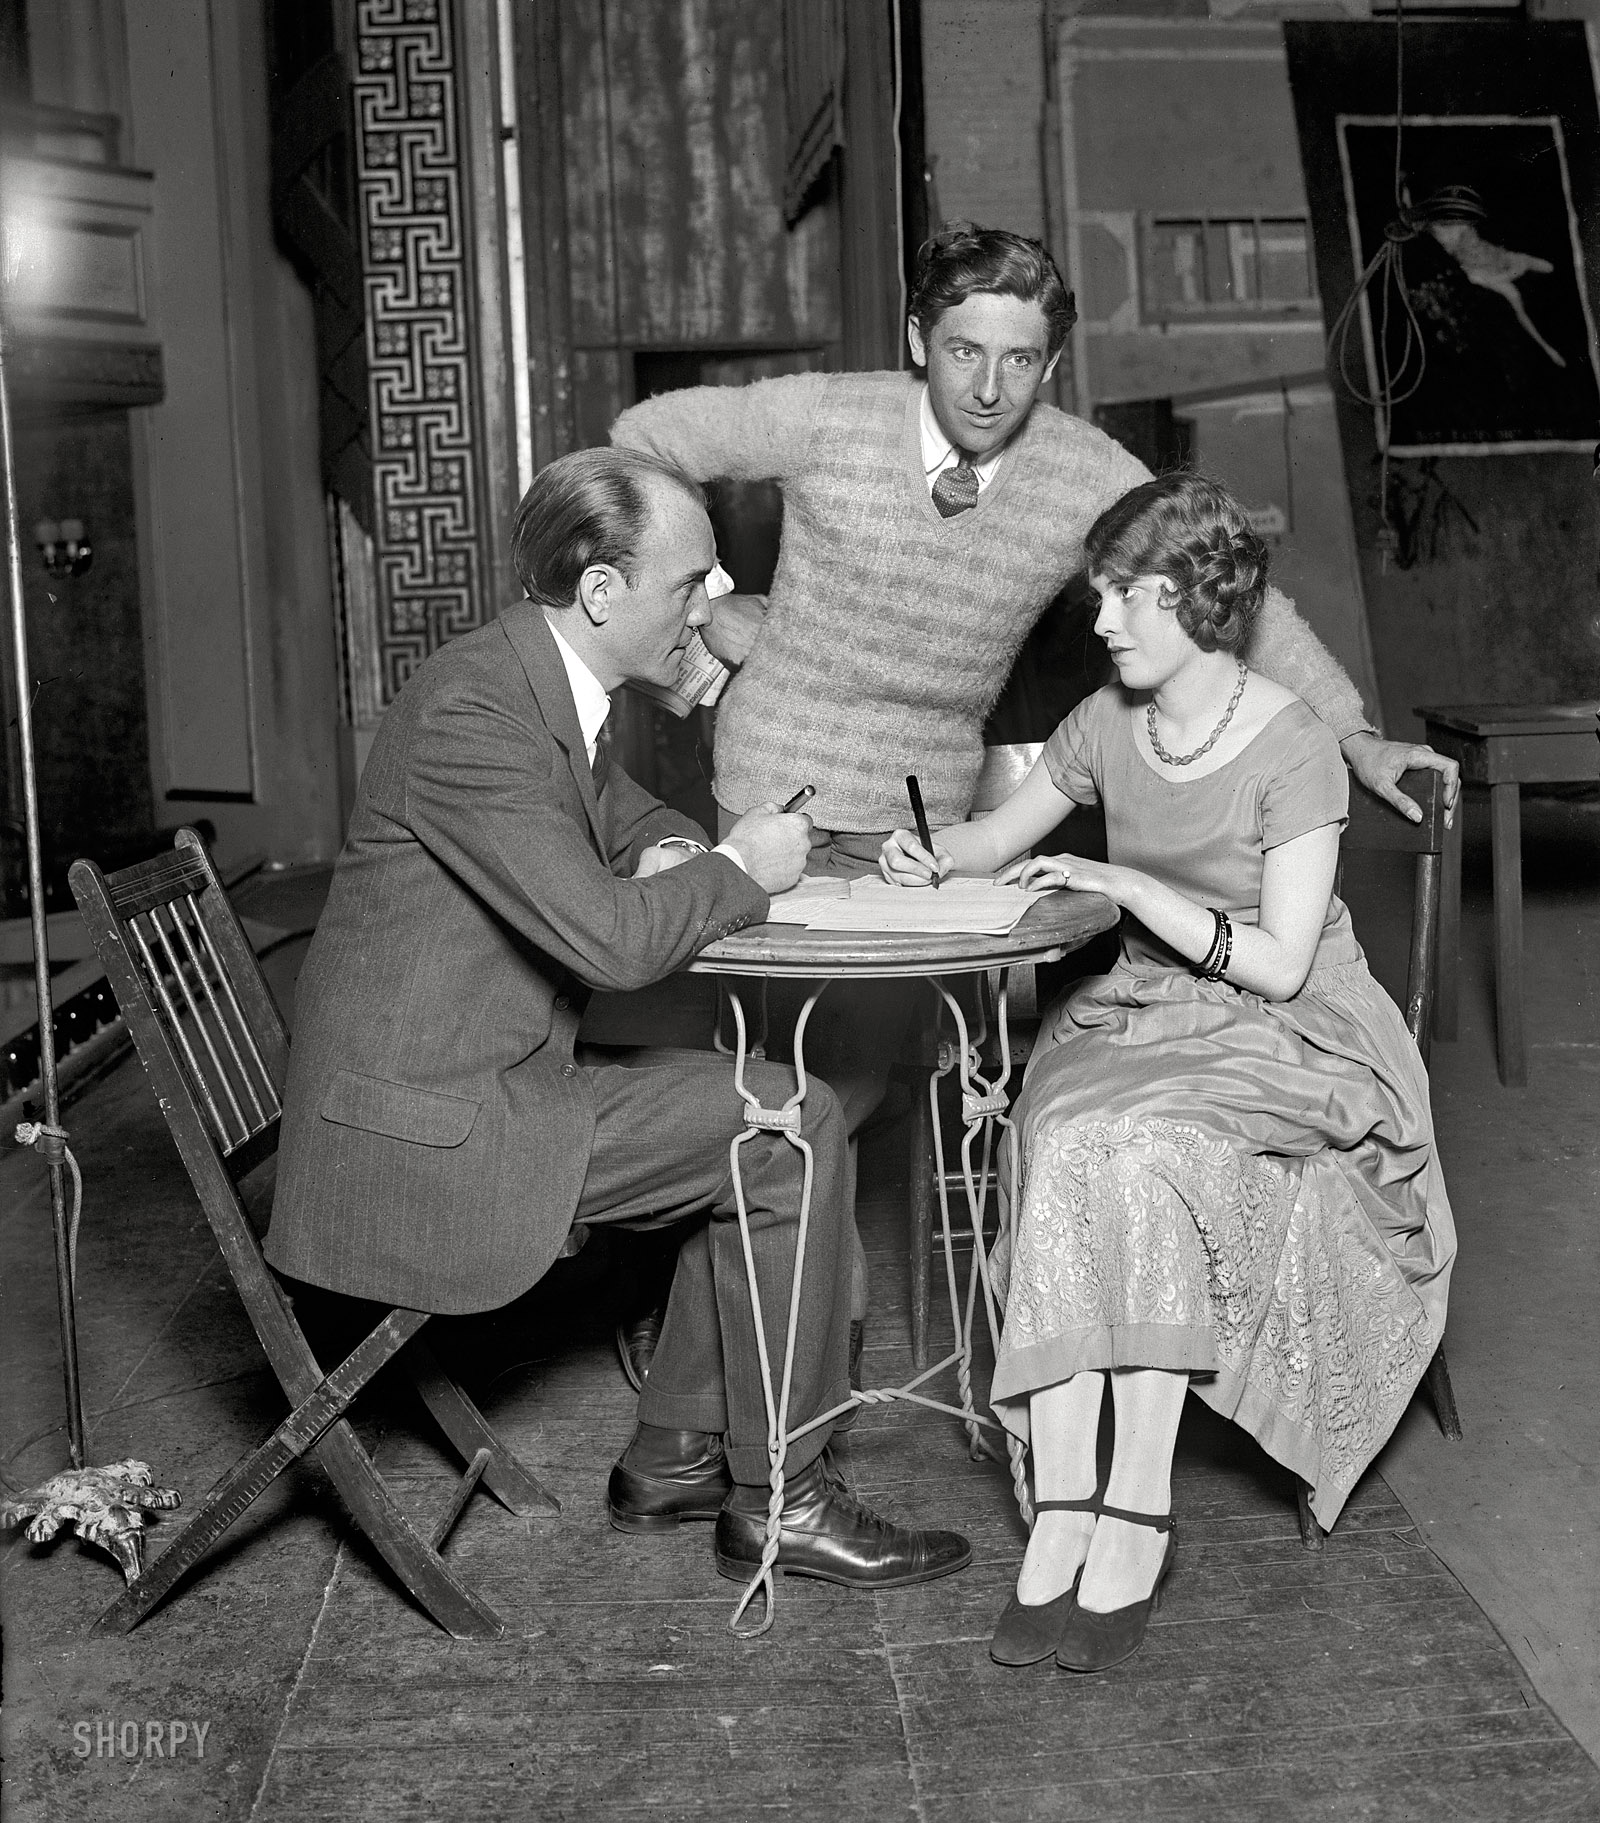 January 26, 1925. Washington, D.C. "Broadway impresario Earl Carroll signs up Miss Katherine Revner in The Rat." Nat'l Photo glass negative. View full size.